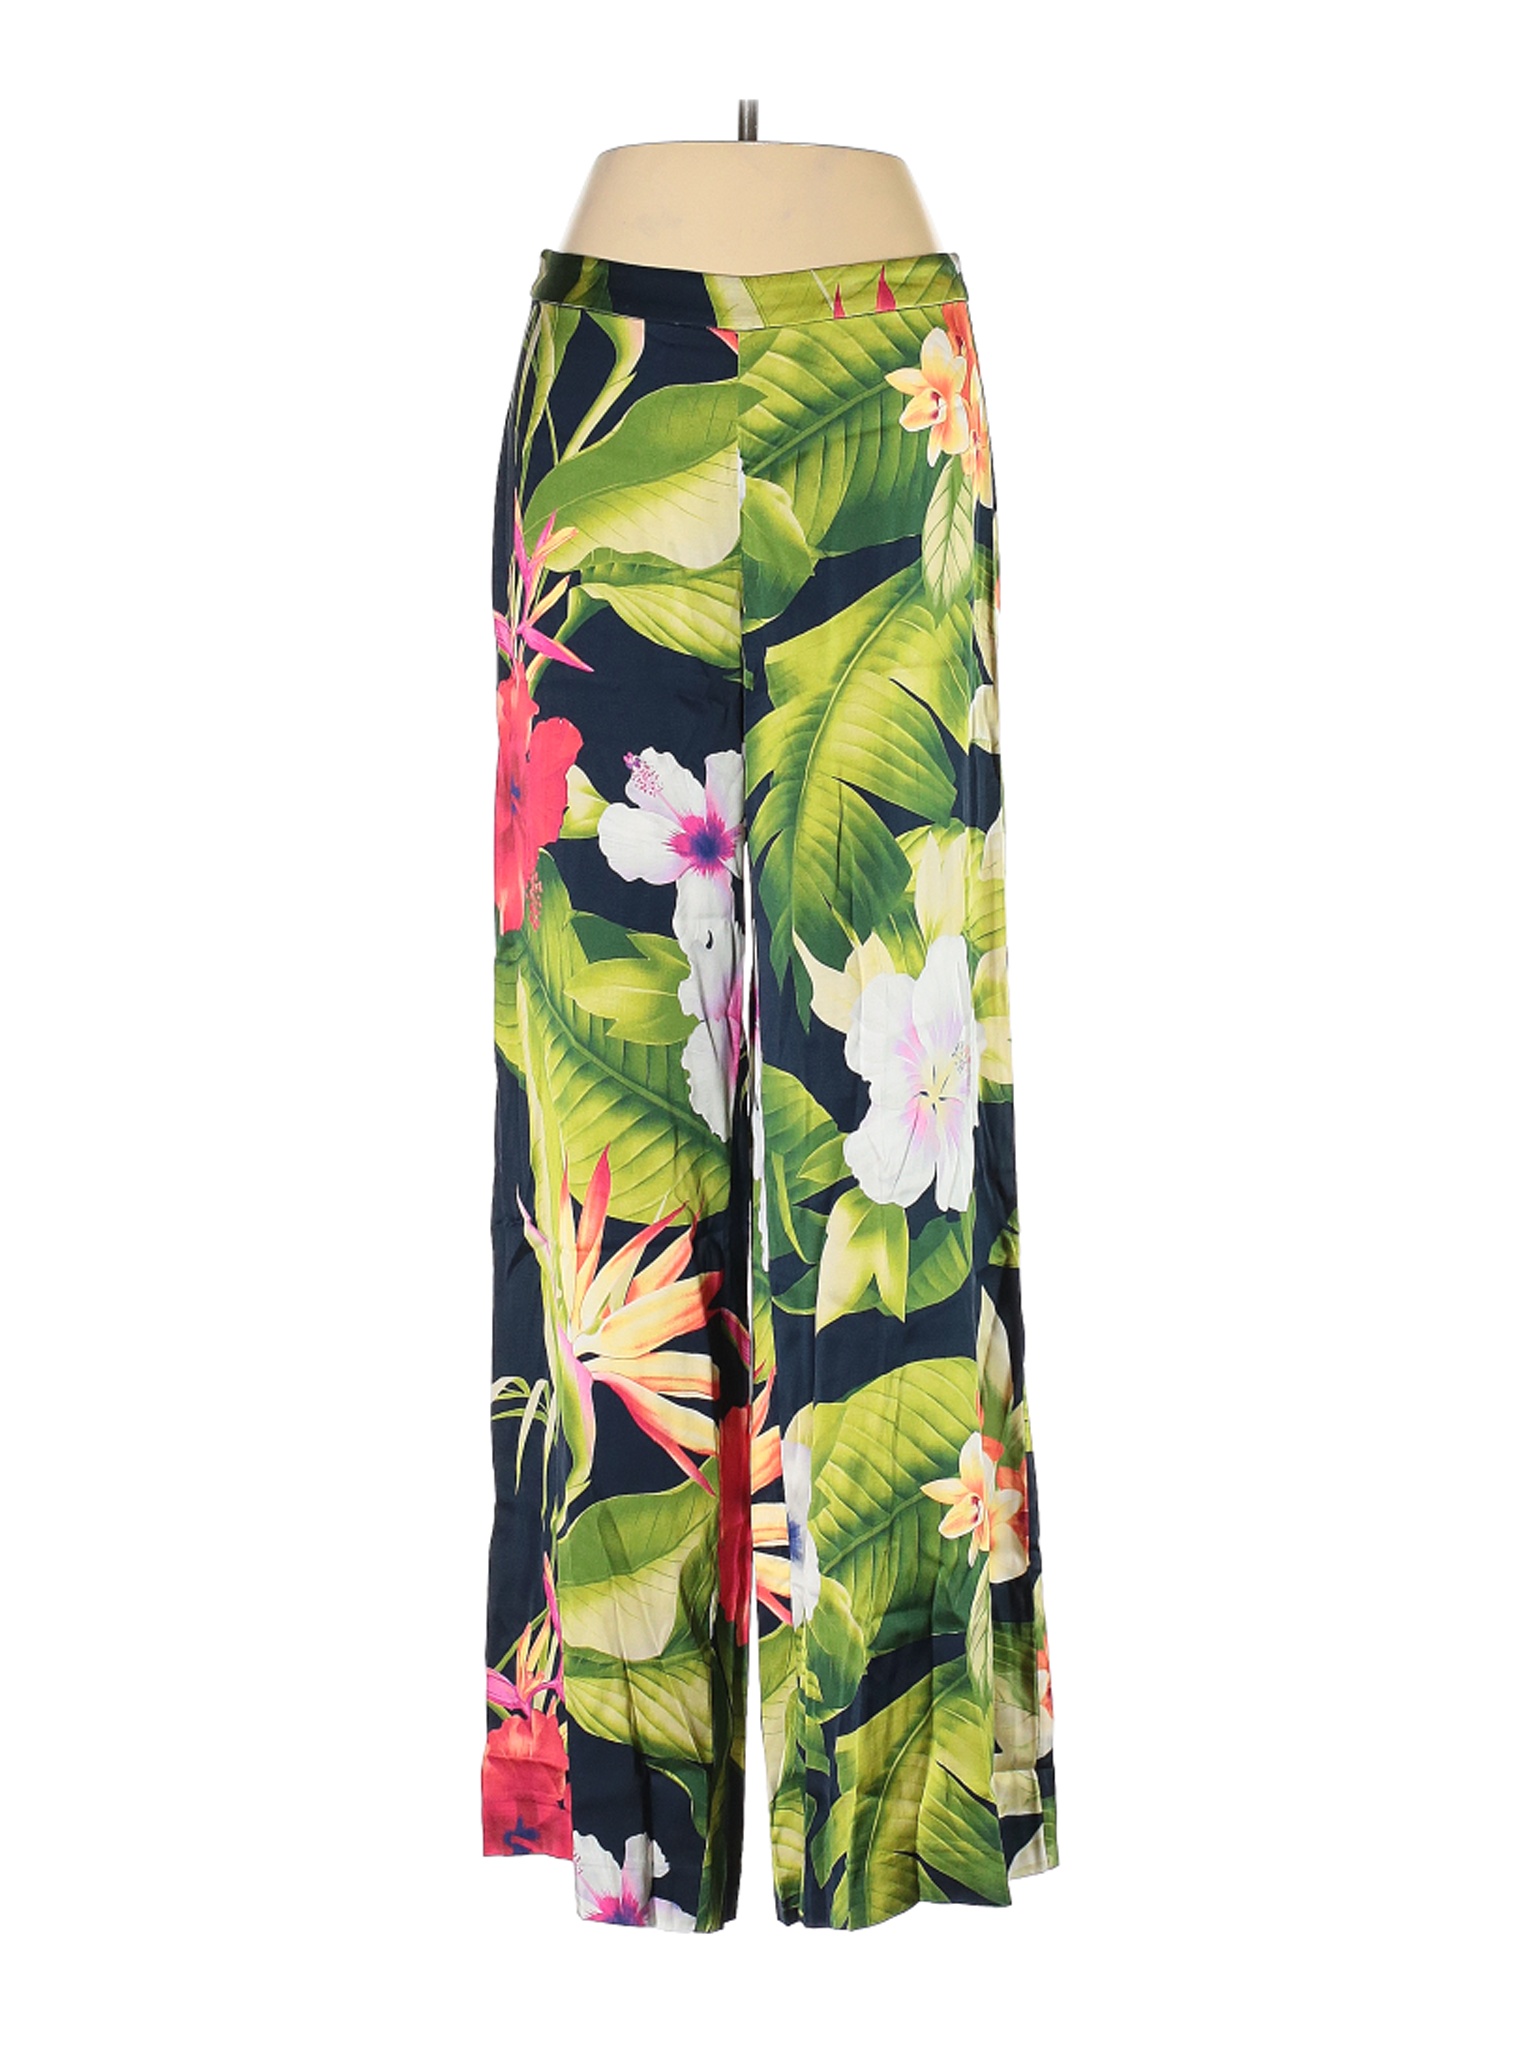 NWT Tommy Bahama Women Green Casual Pants 4 | eBay